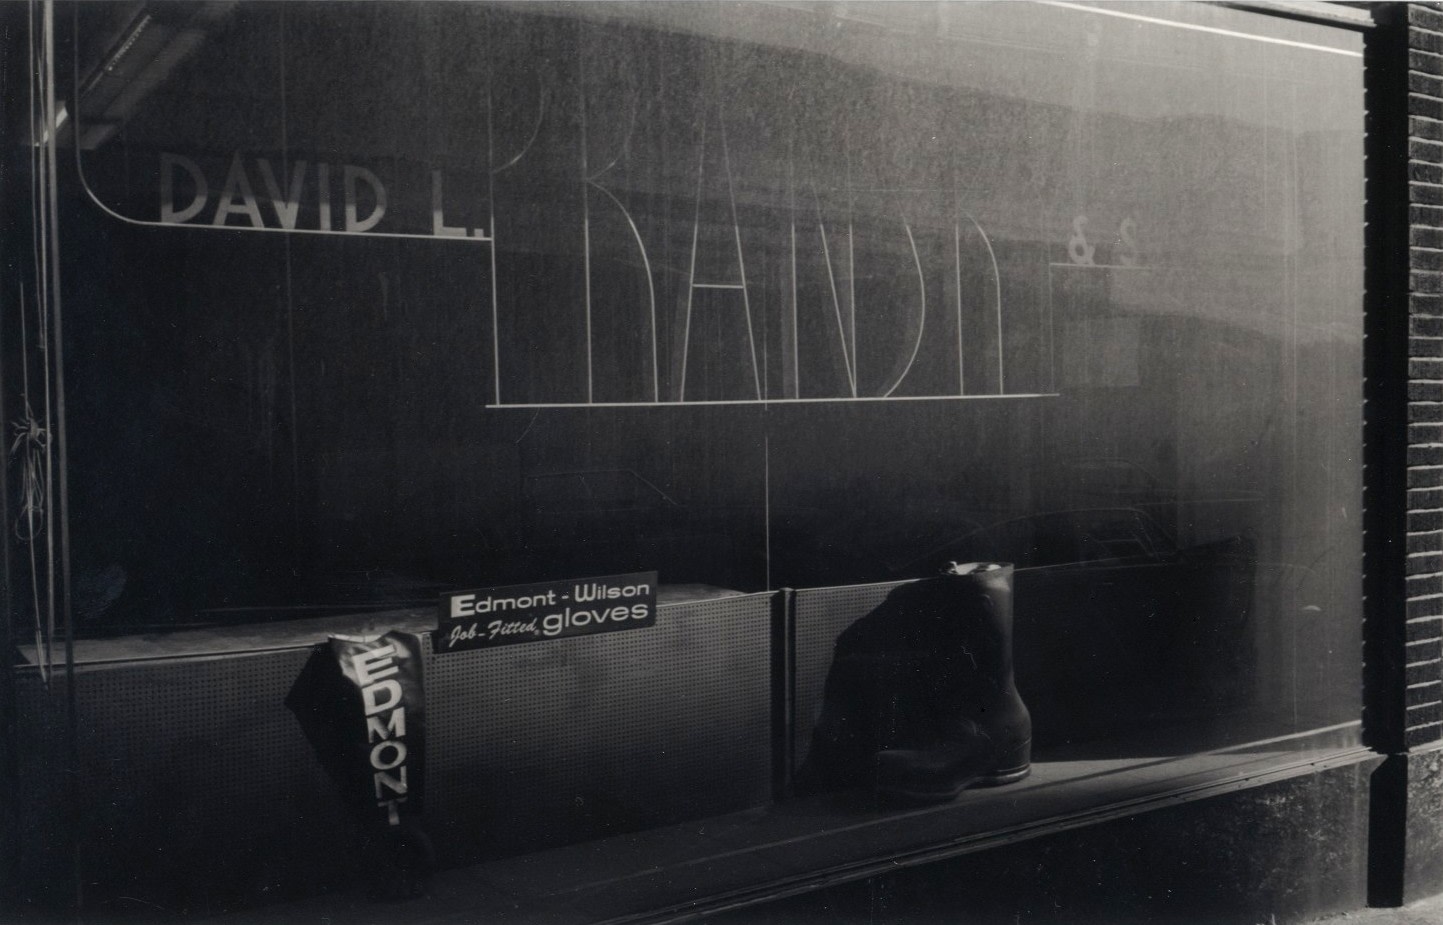 David Pransky, 1973